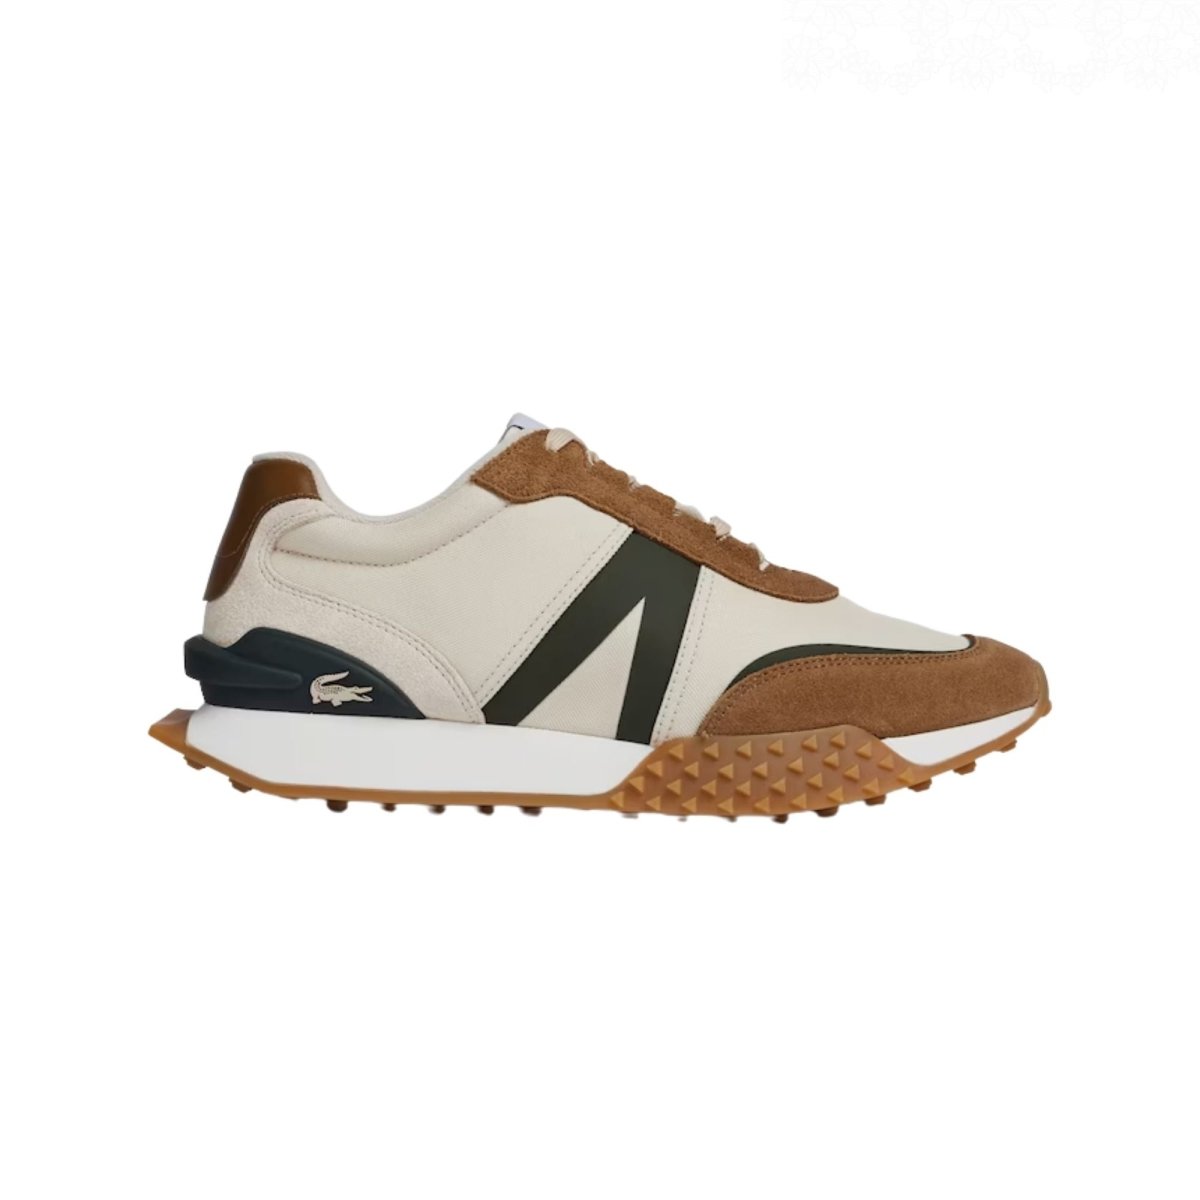 Zapatillas Hombre Menâžs Deluxe Leather Textile Outdoor Shoes | Comprar Online en Much Sneakers®